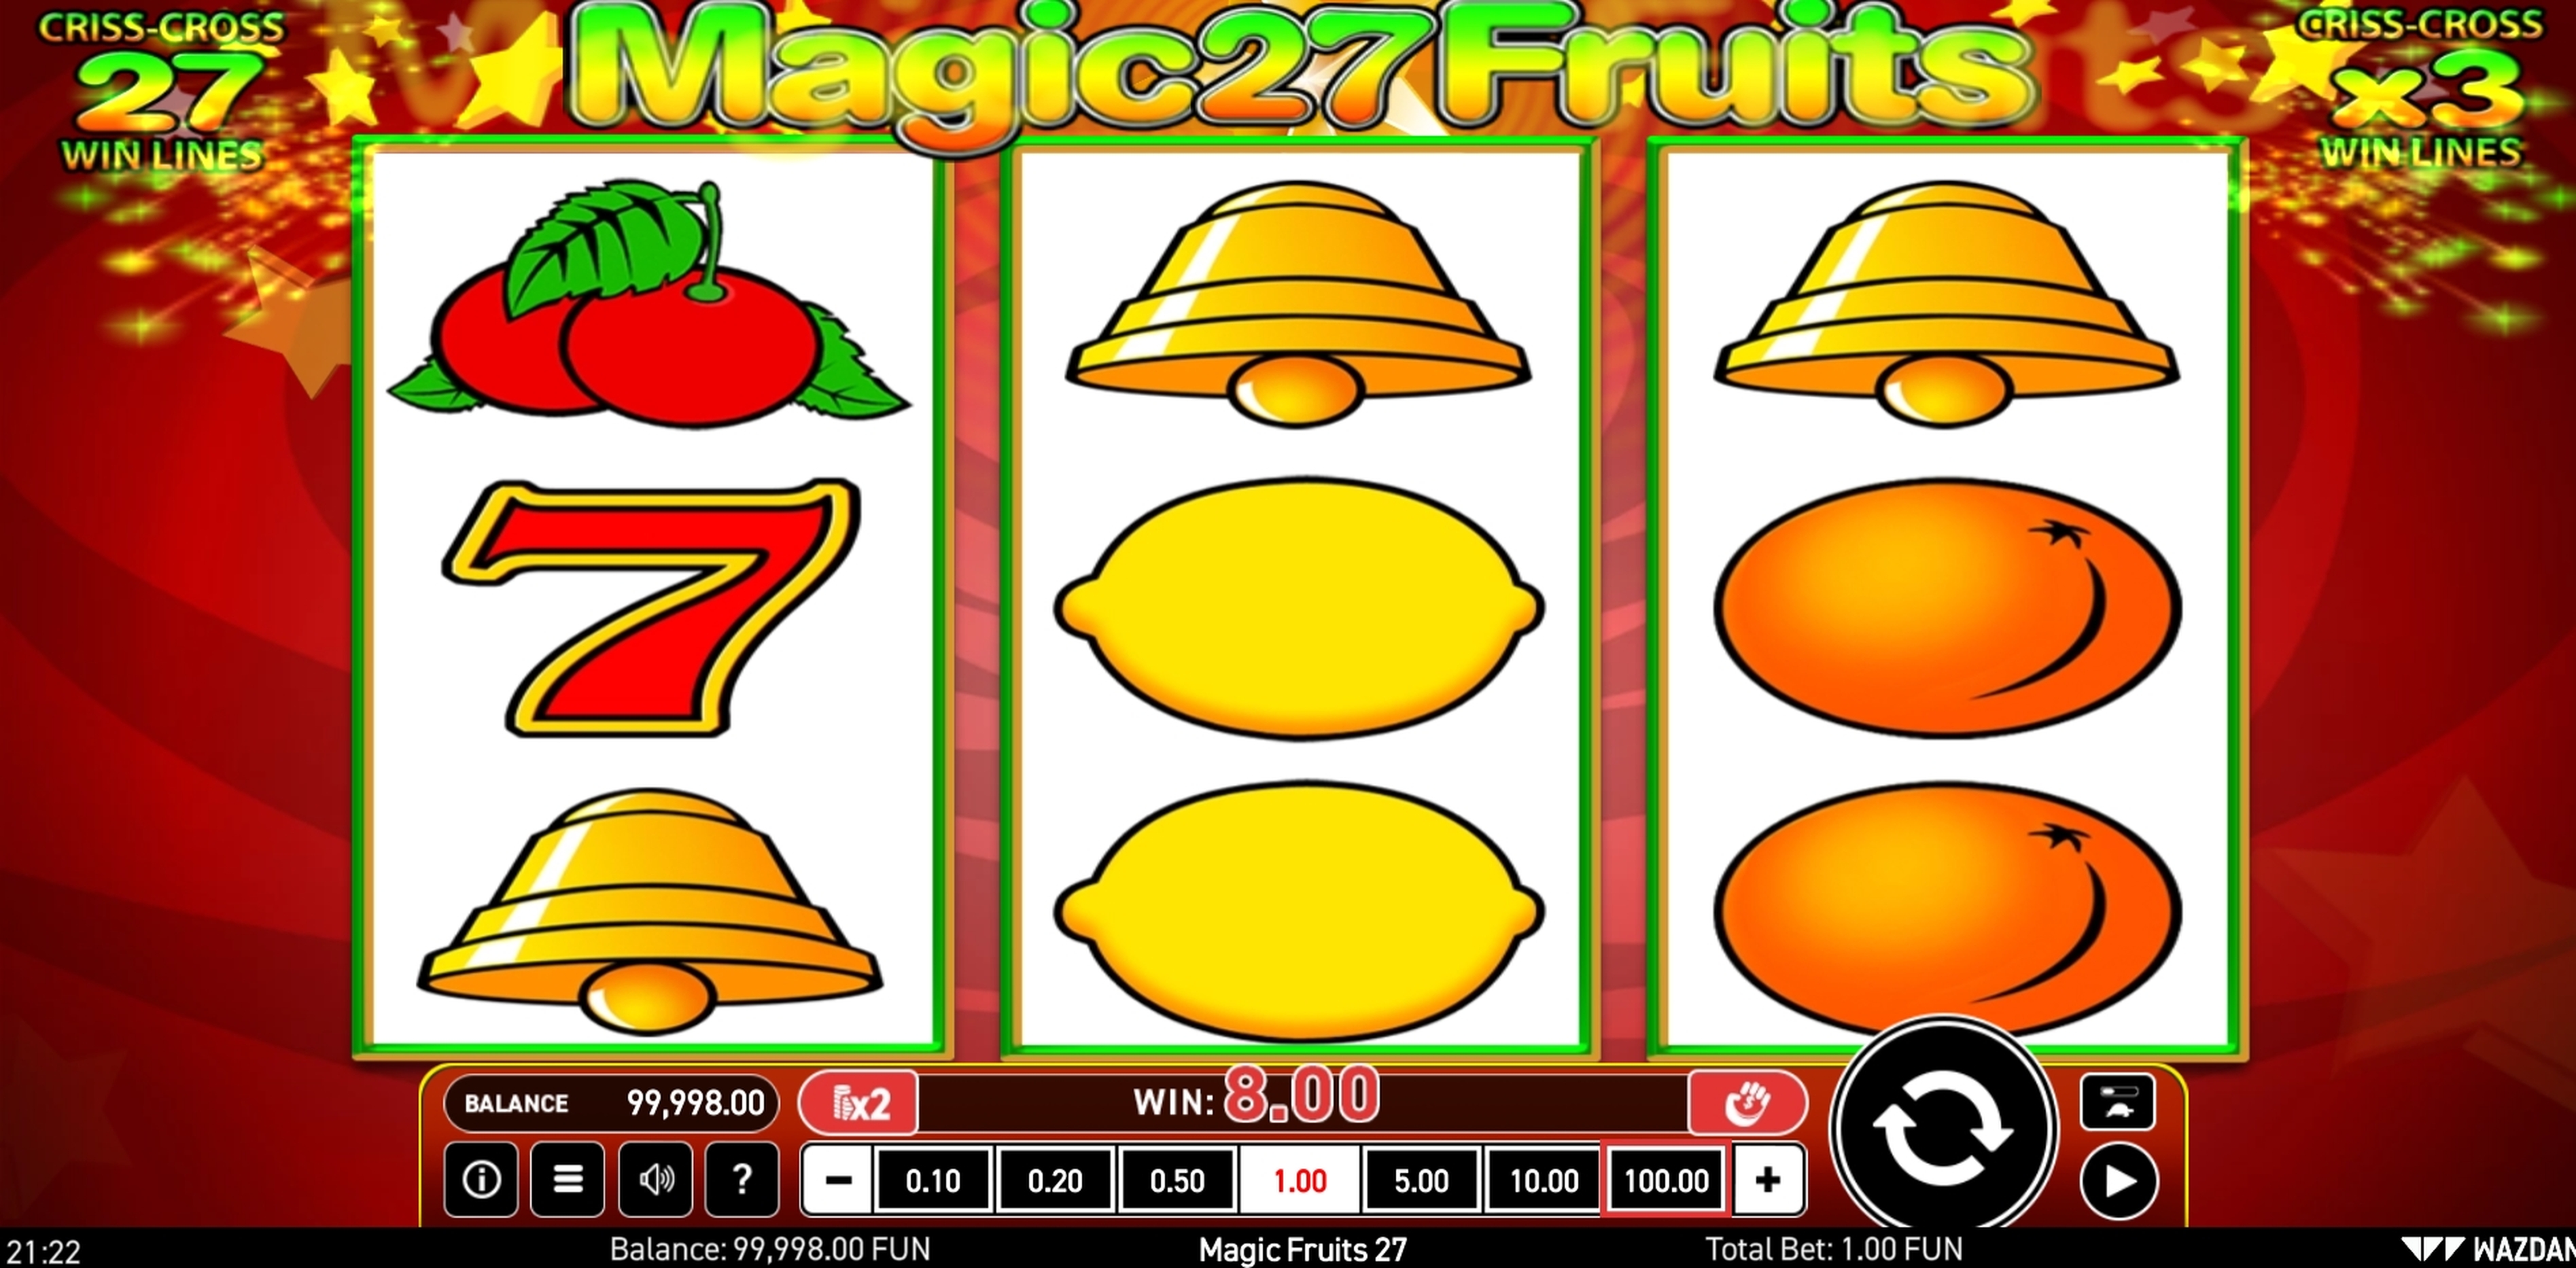 Win Money in Magic Fruits 27 Free Slot Game by Wazdan